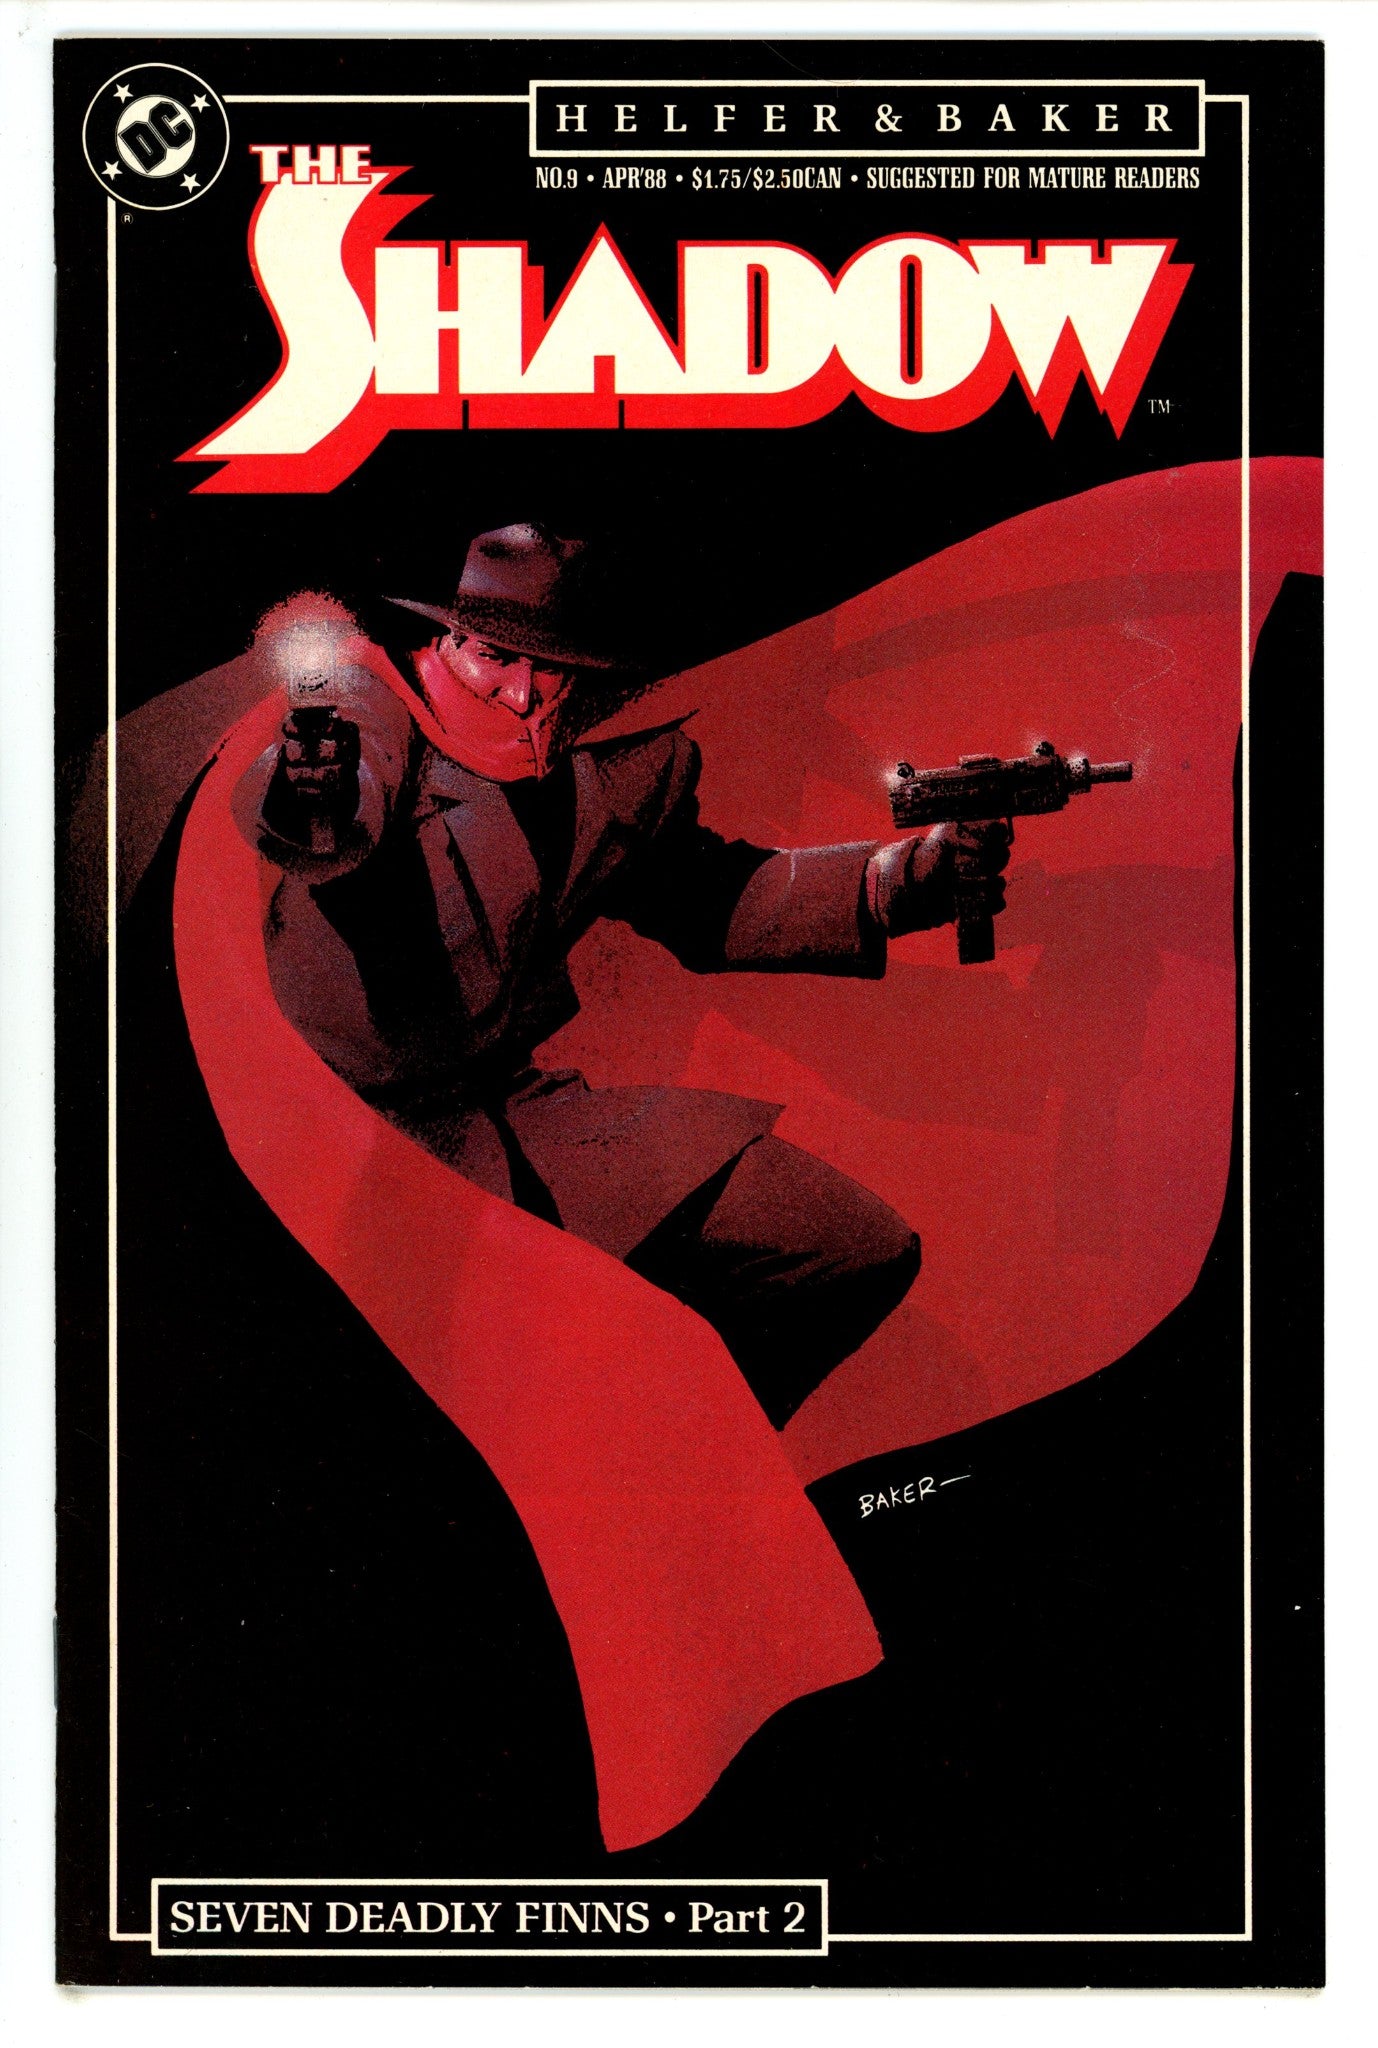 The Shadow Vol 3 9 (1988)